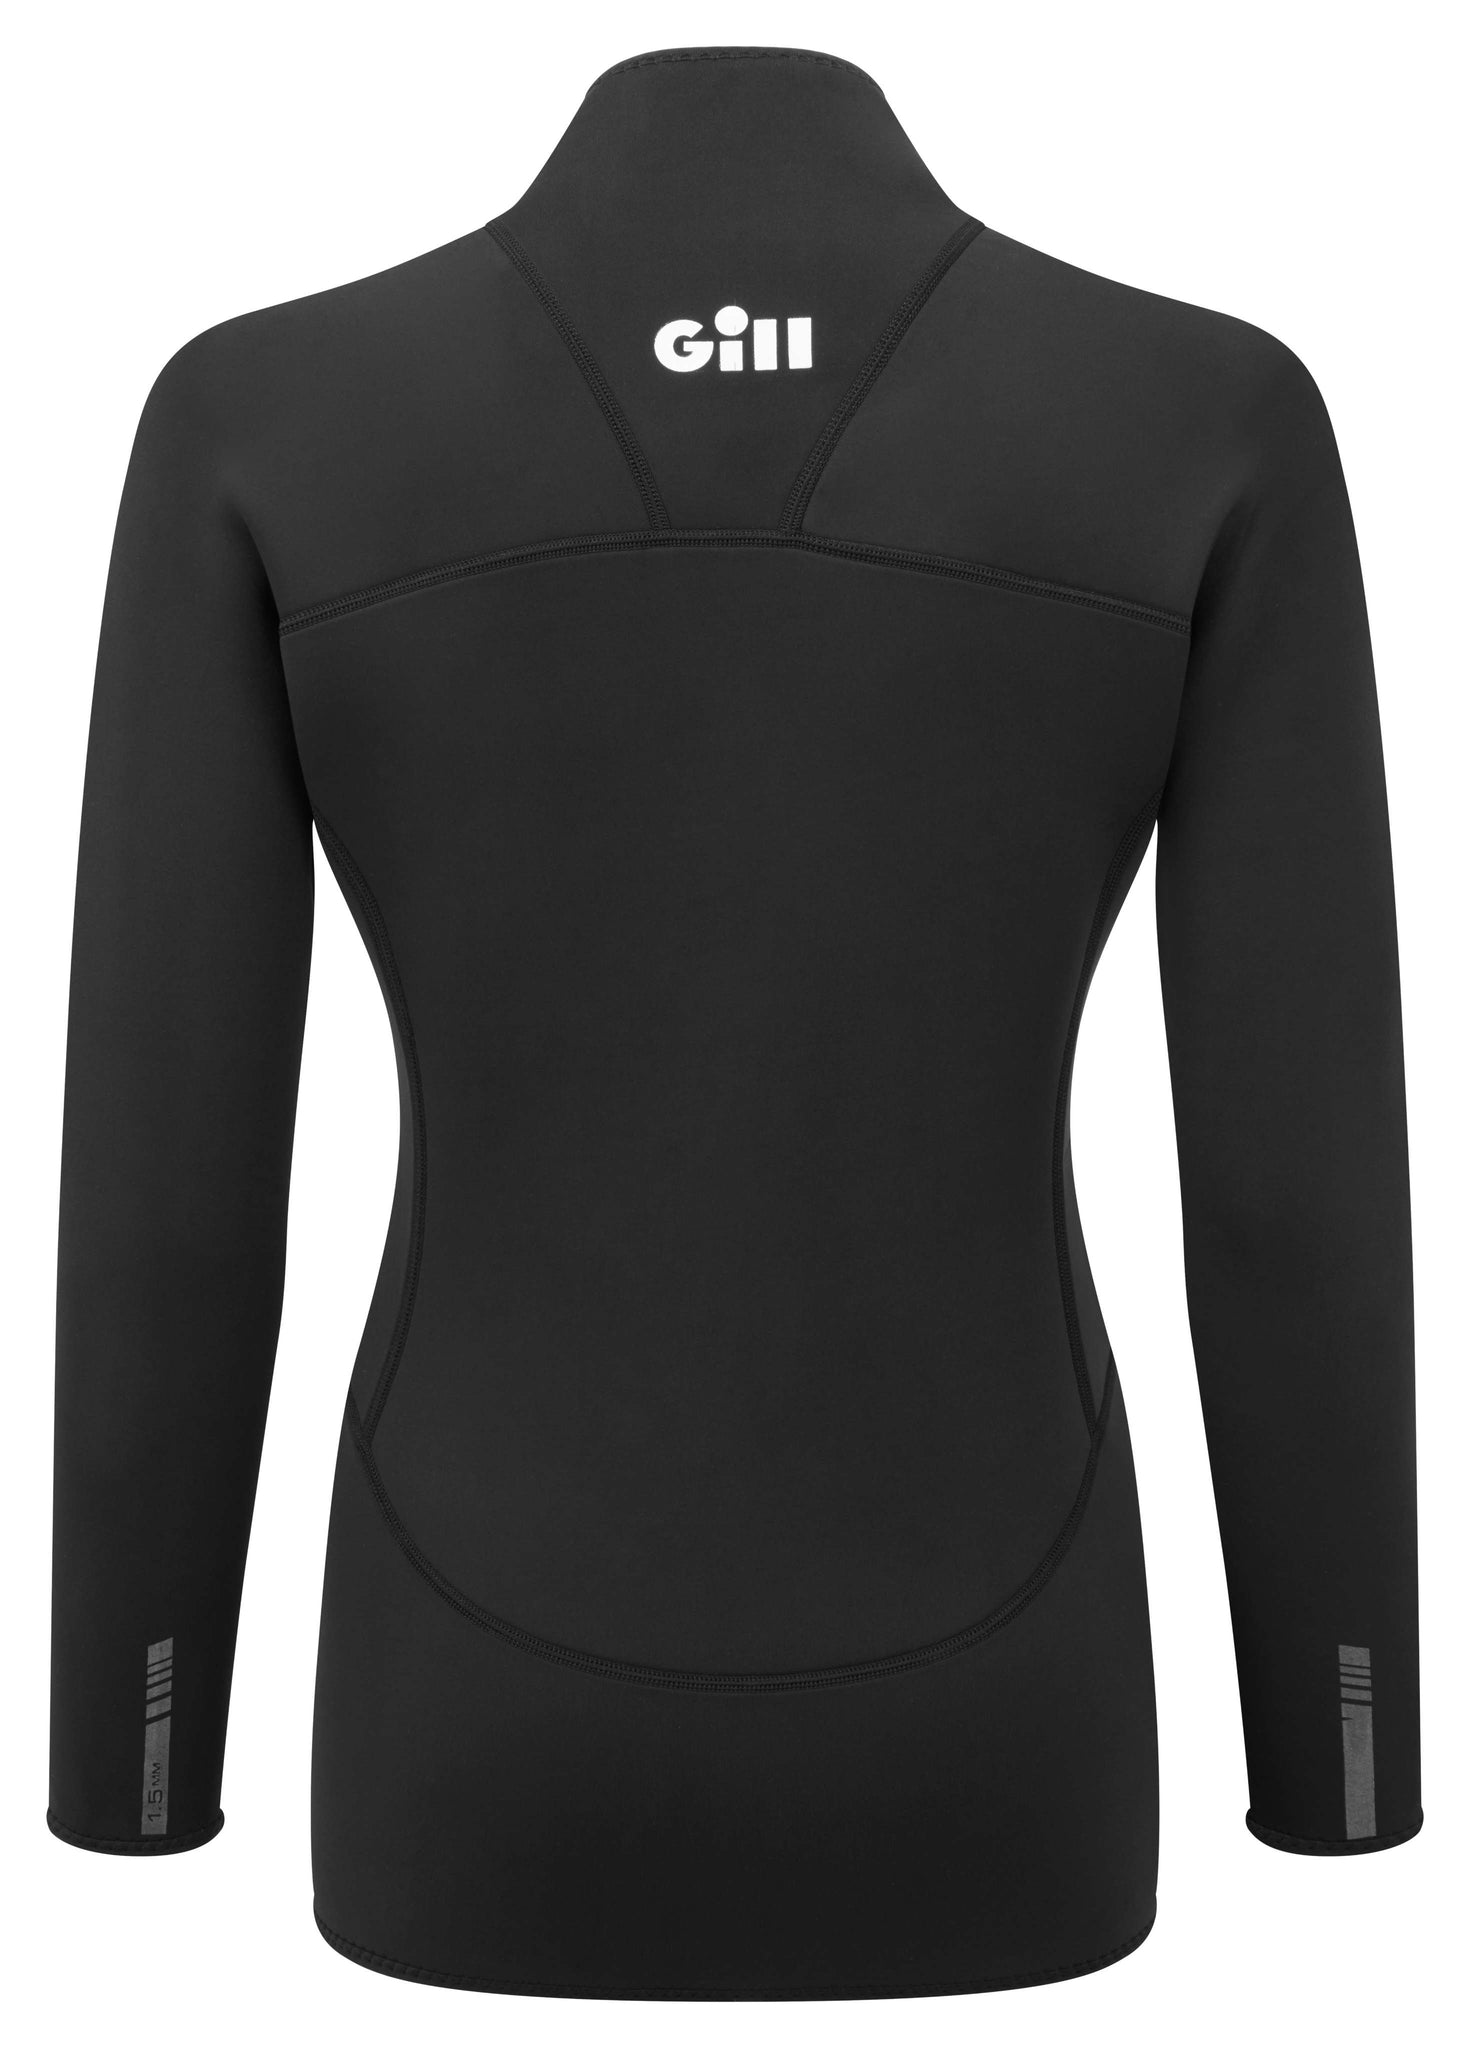 Gill - Women's Pursuit Neoprene Jacket